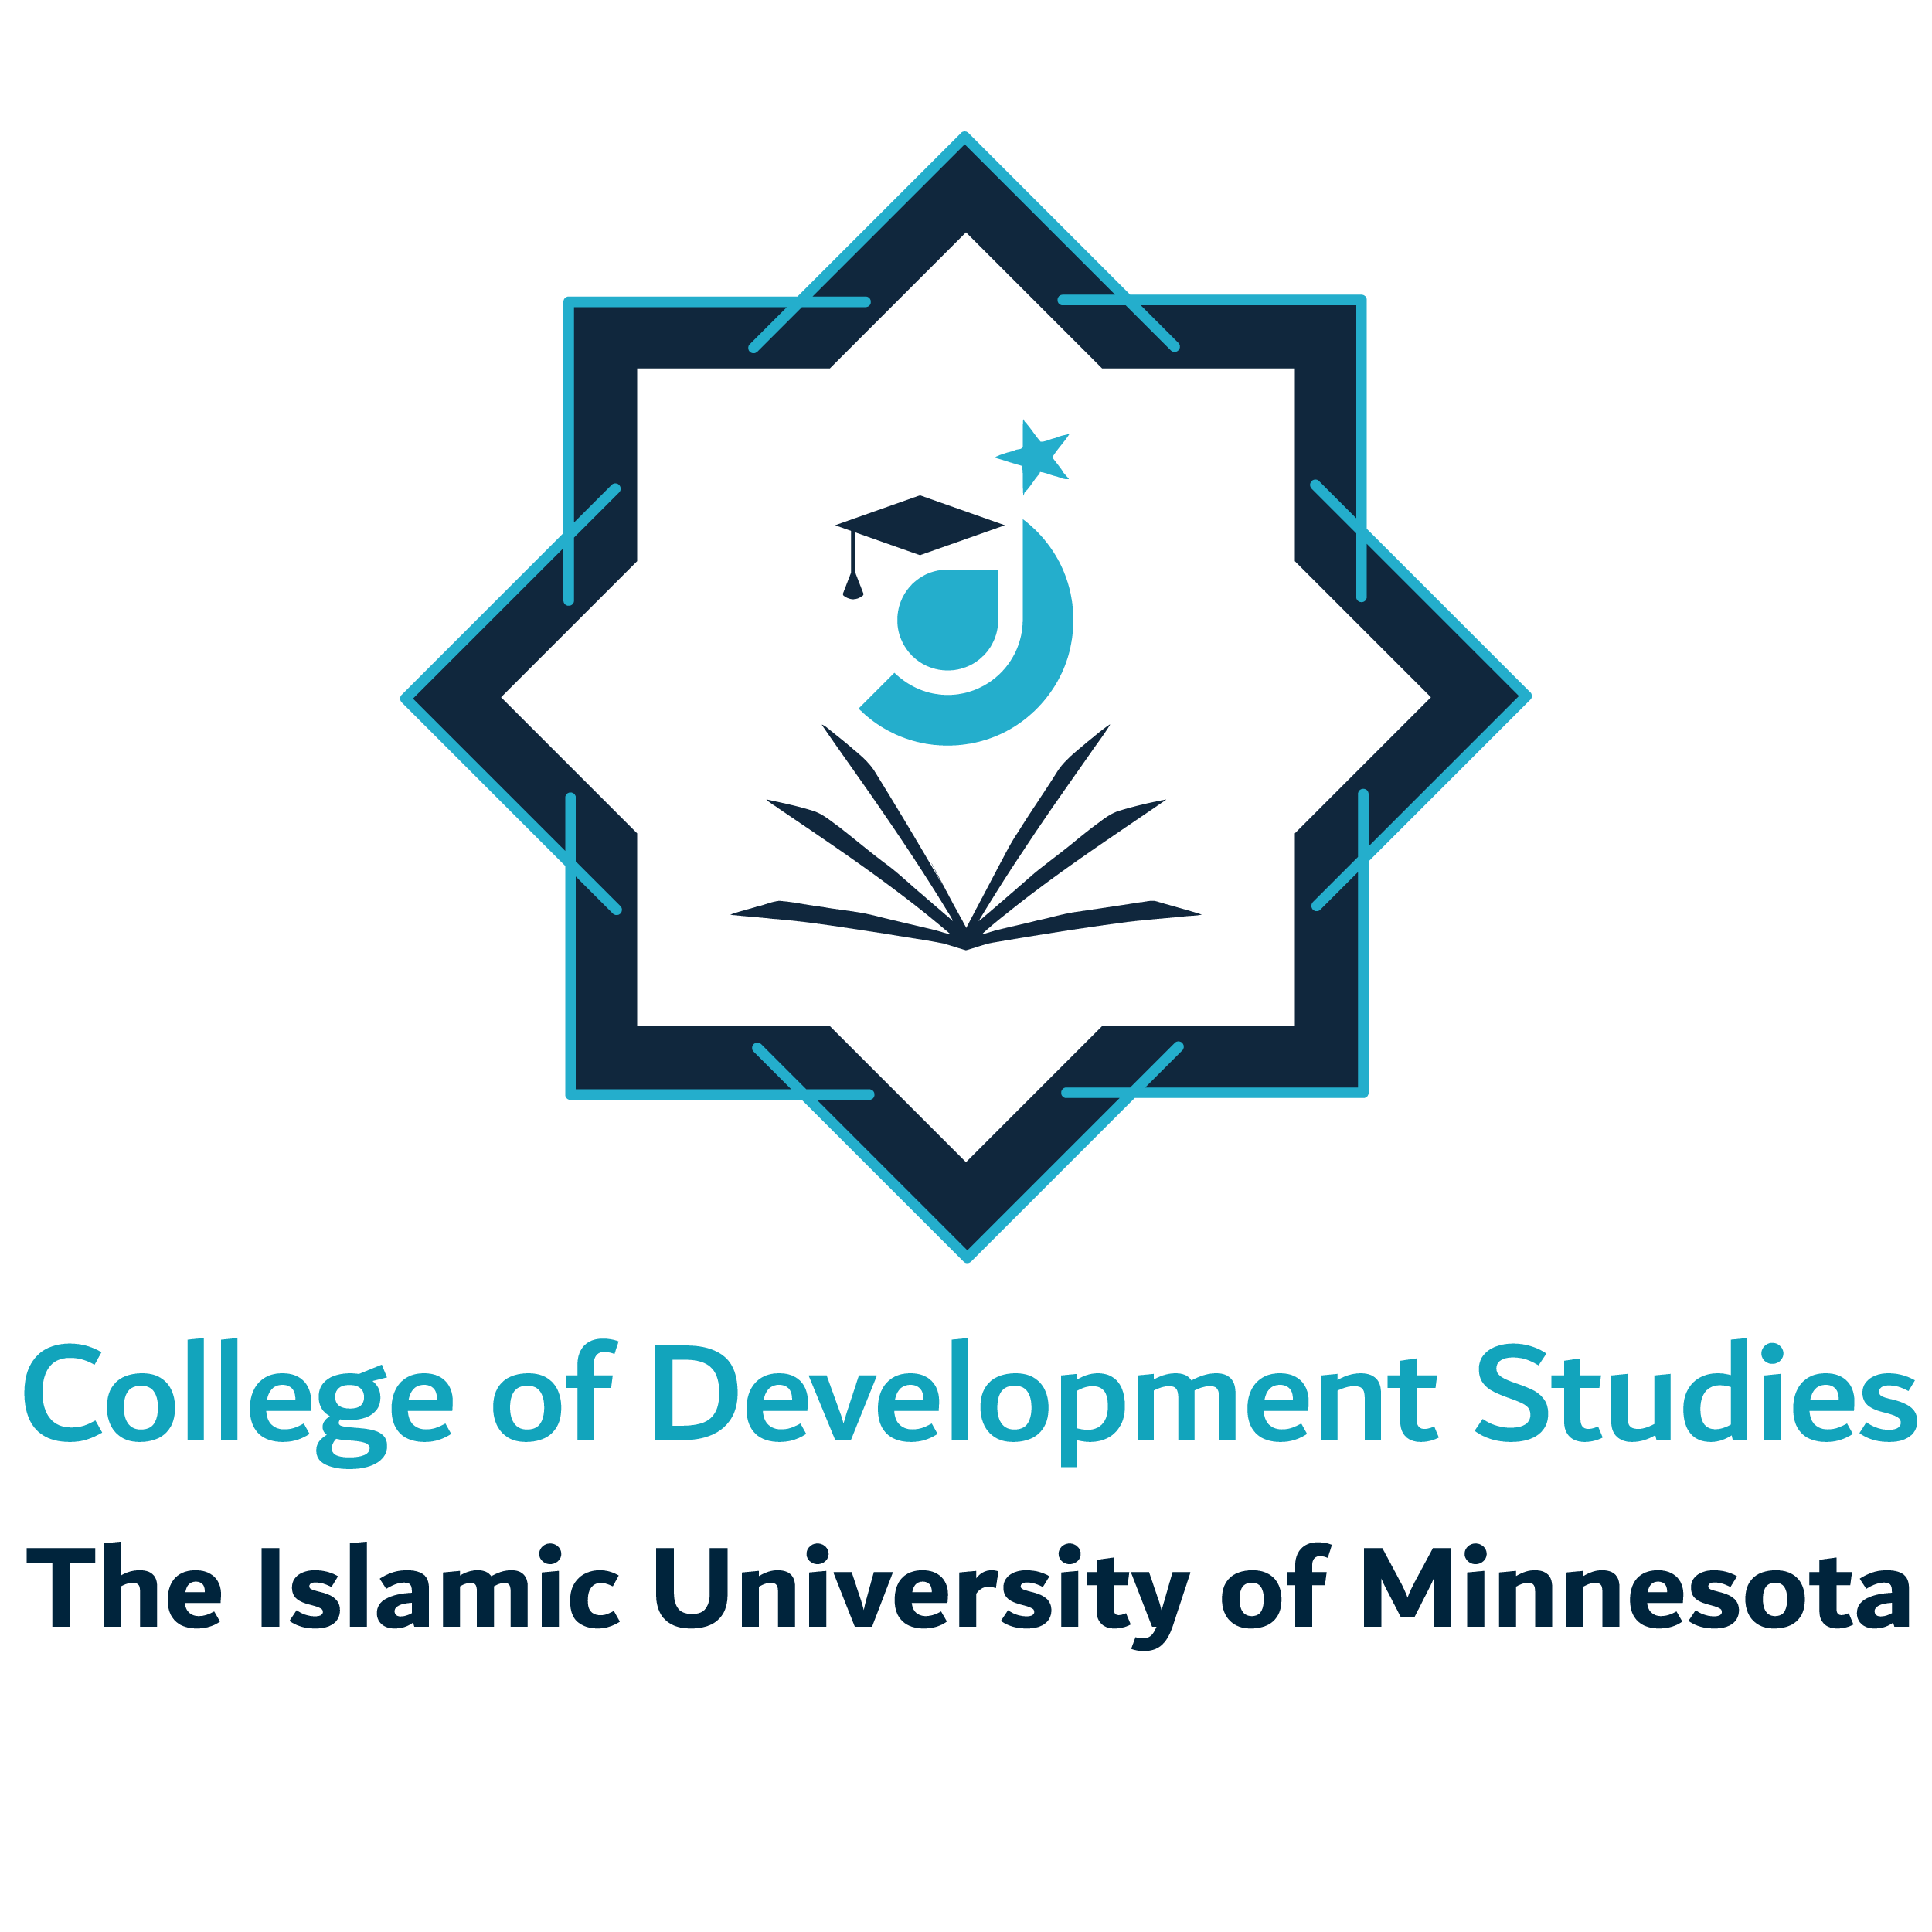 College of Development Studies